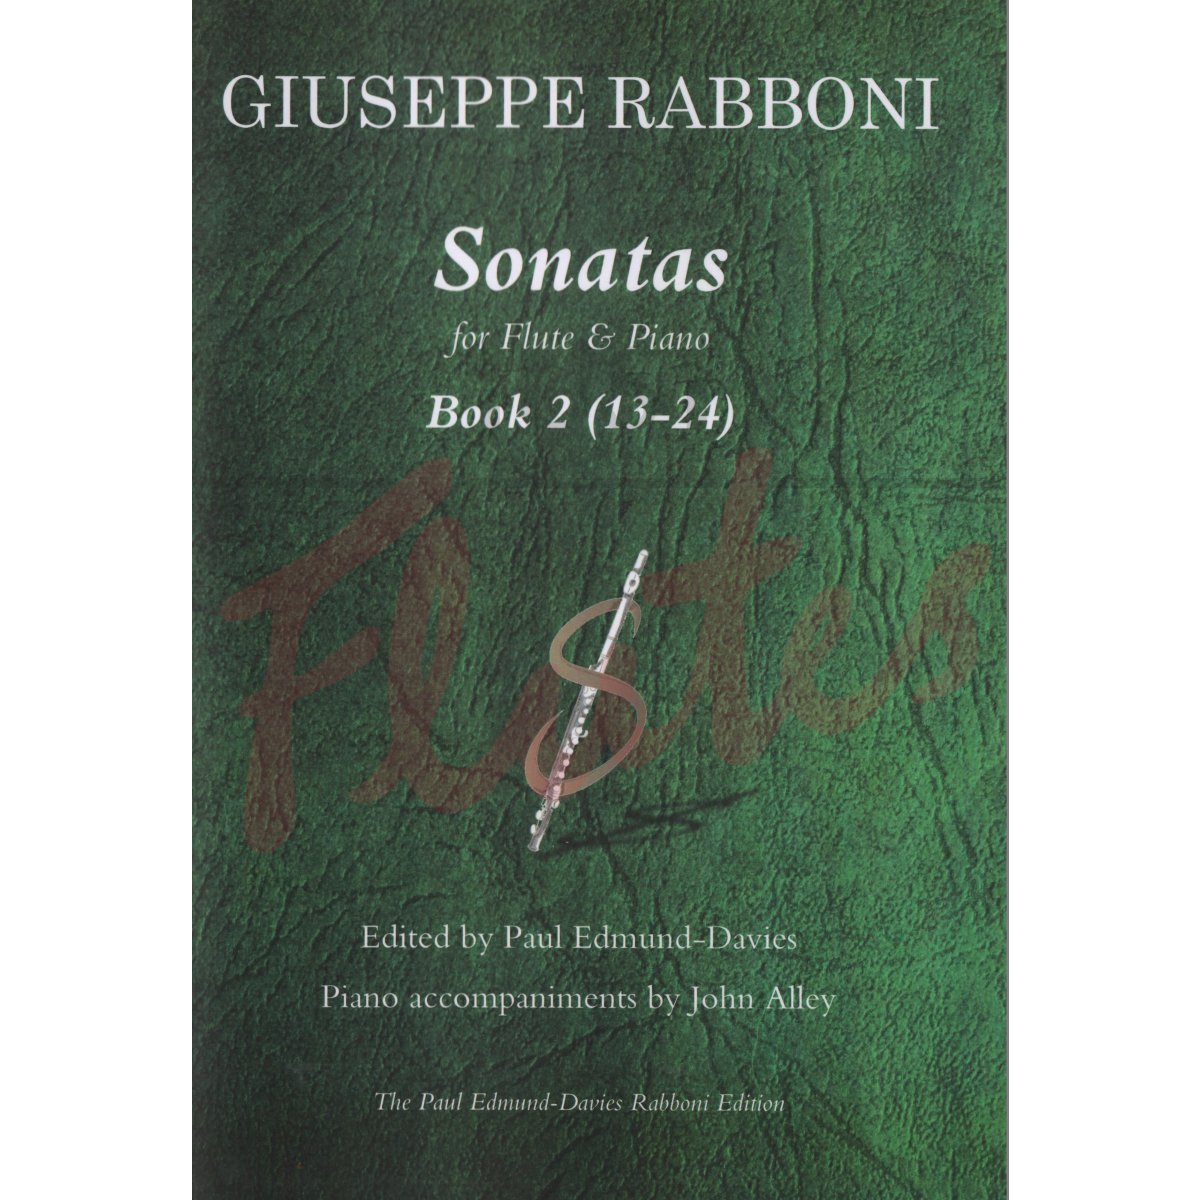 Sonatas for Flute and Piano Book 2, 13-24